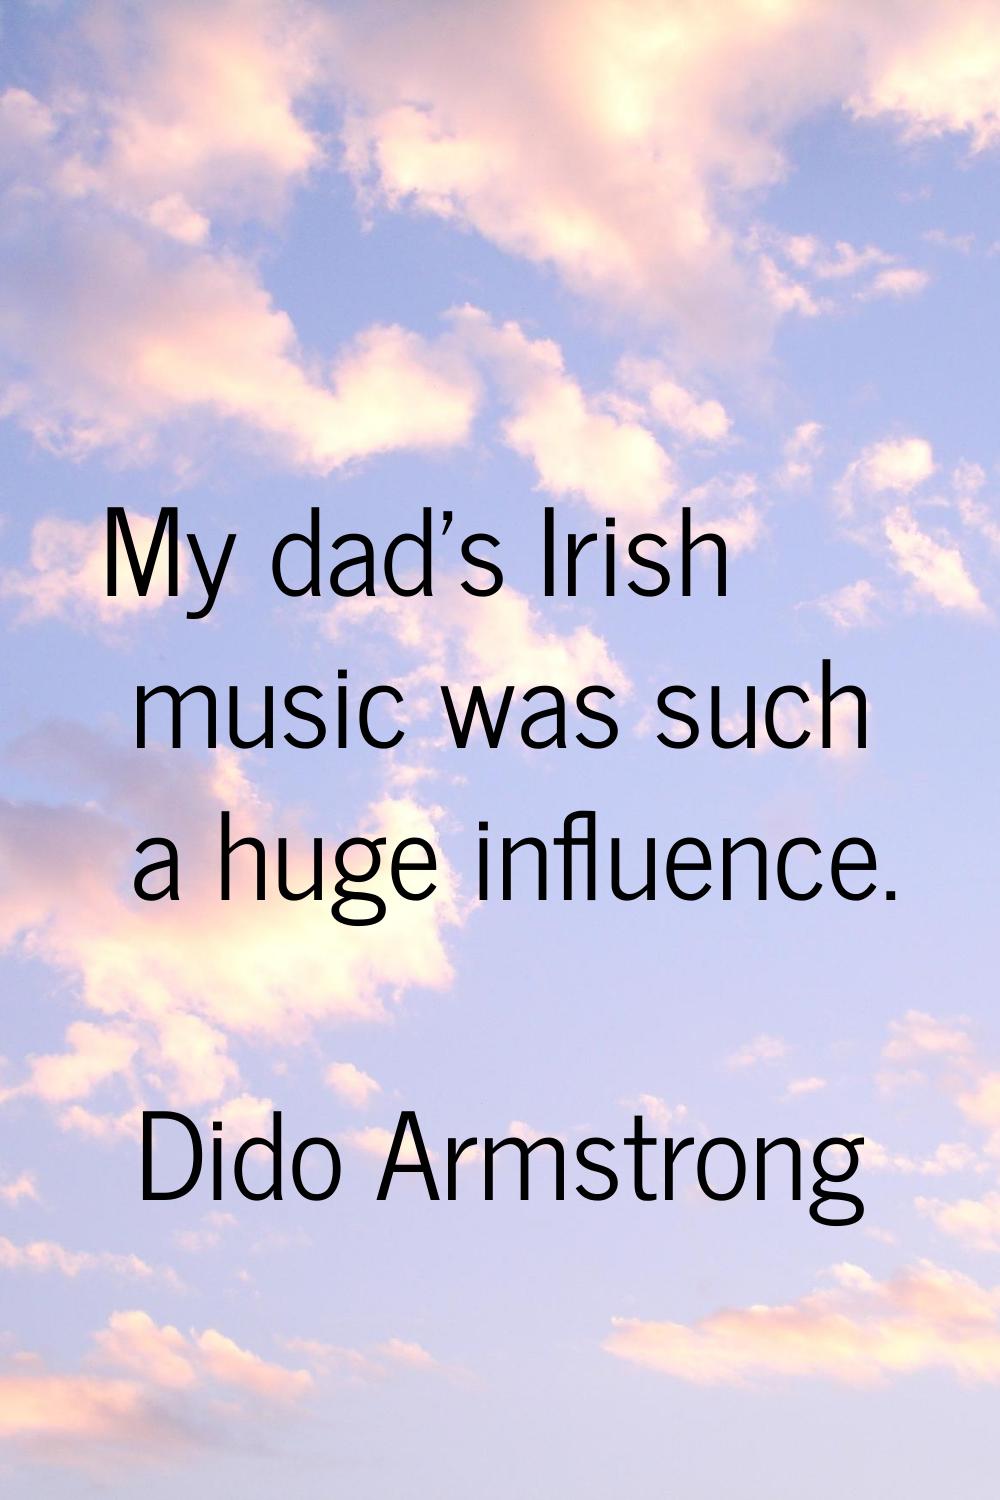 My dad's Irish music was such a huge influence.